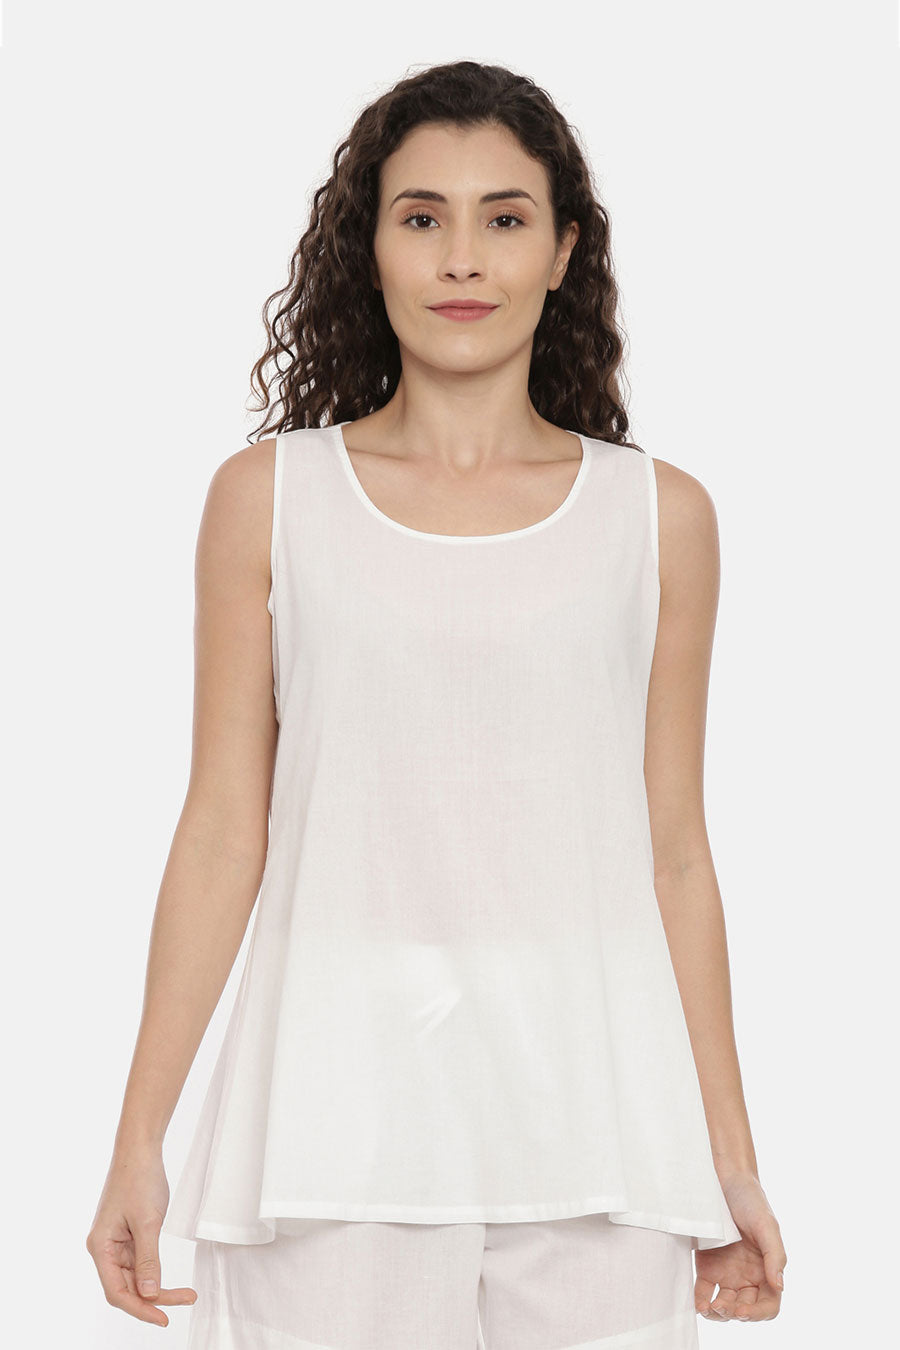 White Top & Short Nightwear Set With Overlay